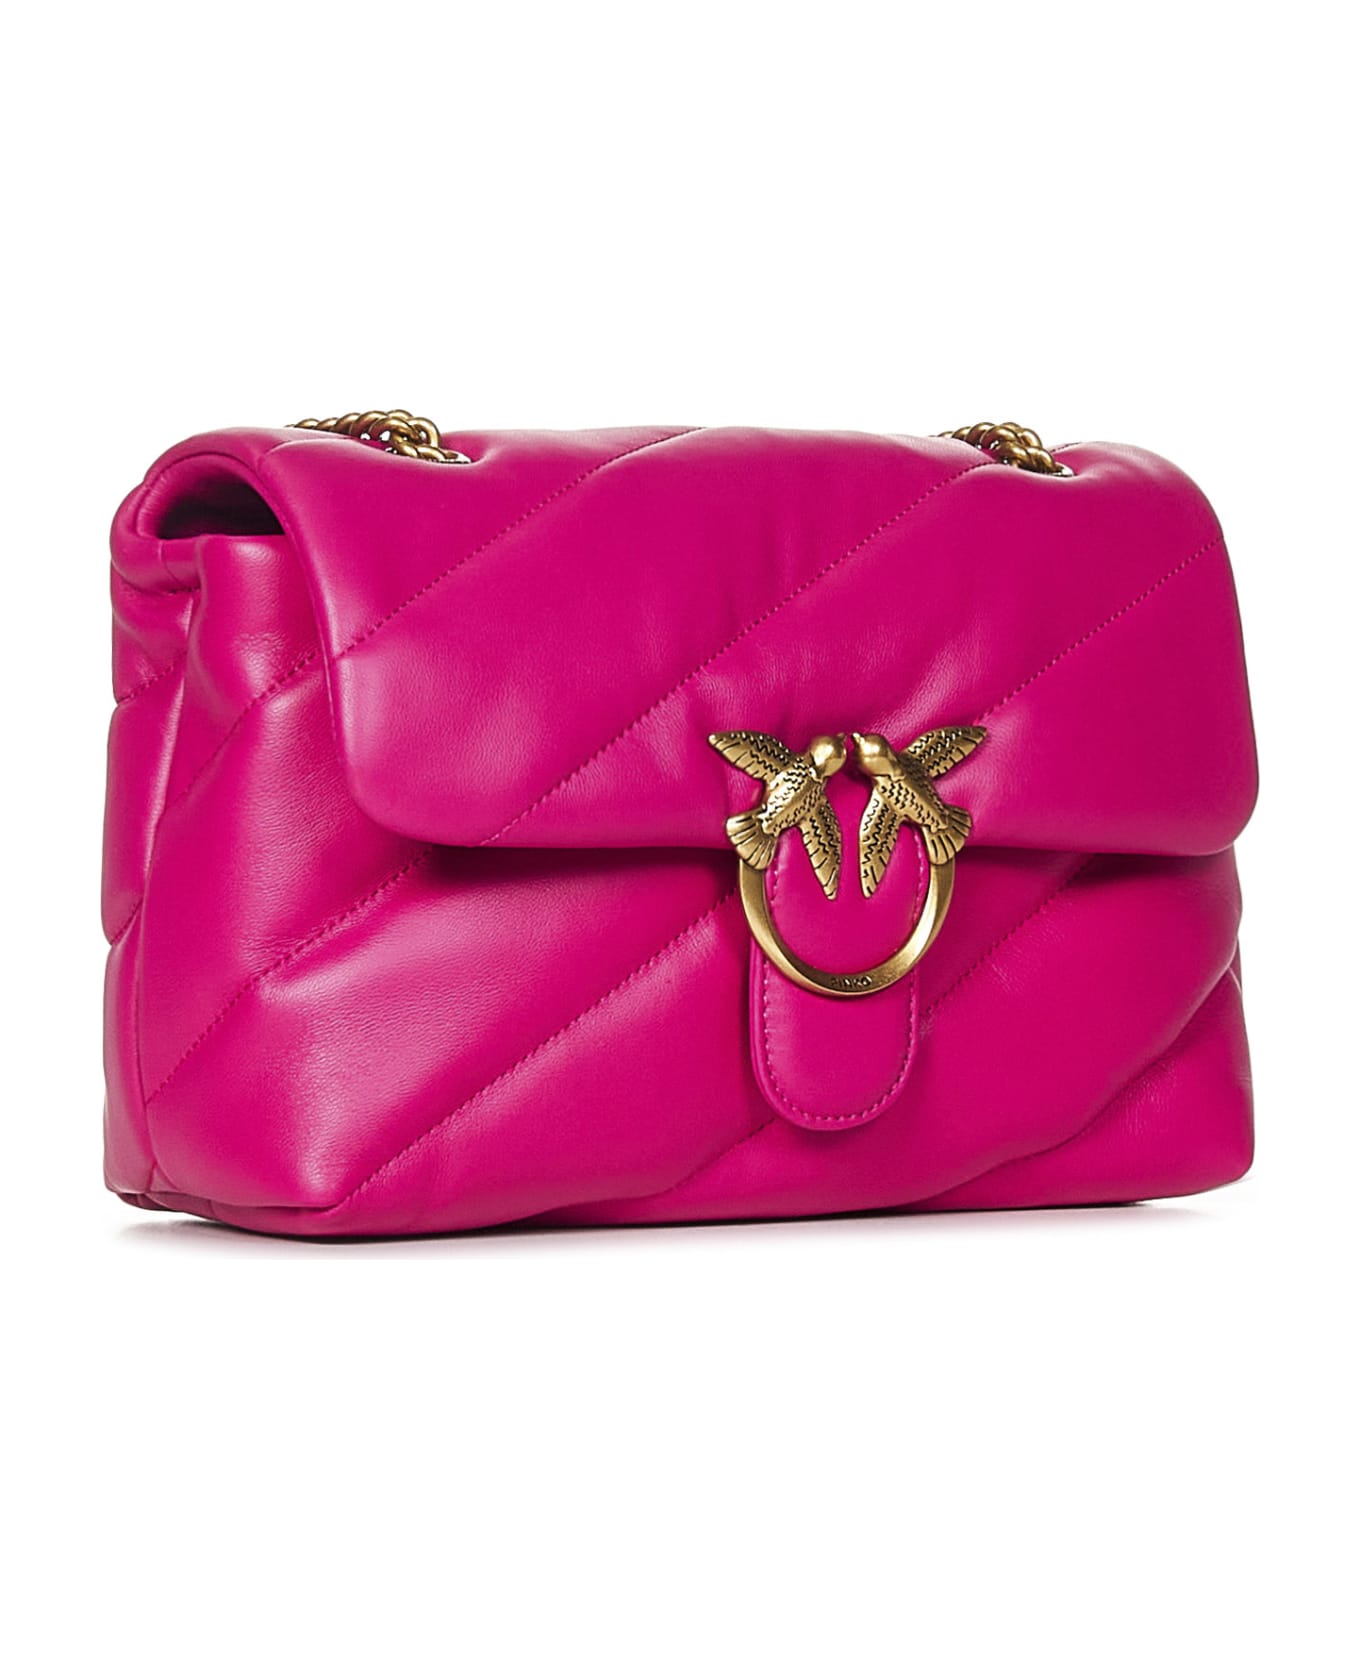 Pinko Classic Love Bag Puff Maxi Quilt Shoulder Bag - Fuchsia